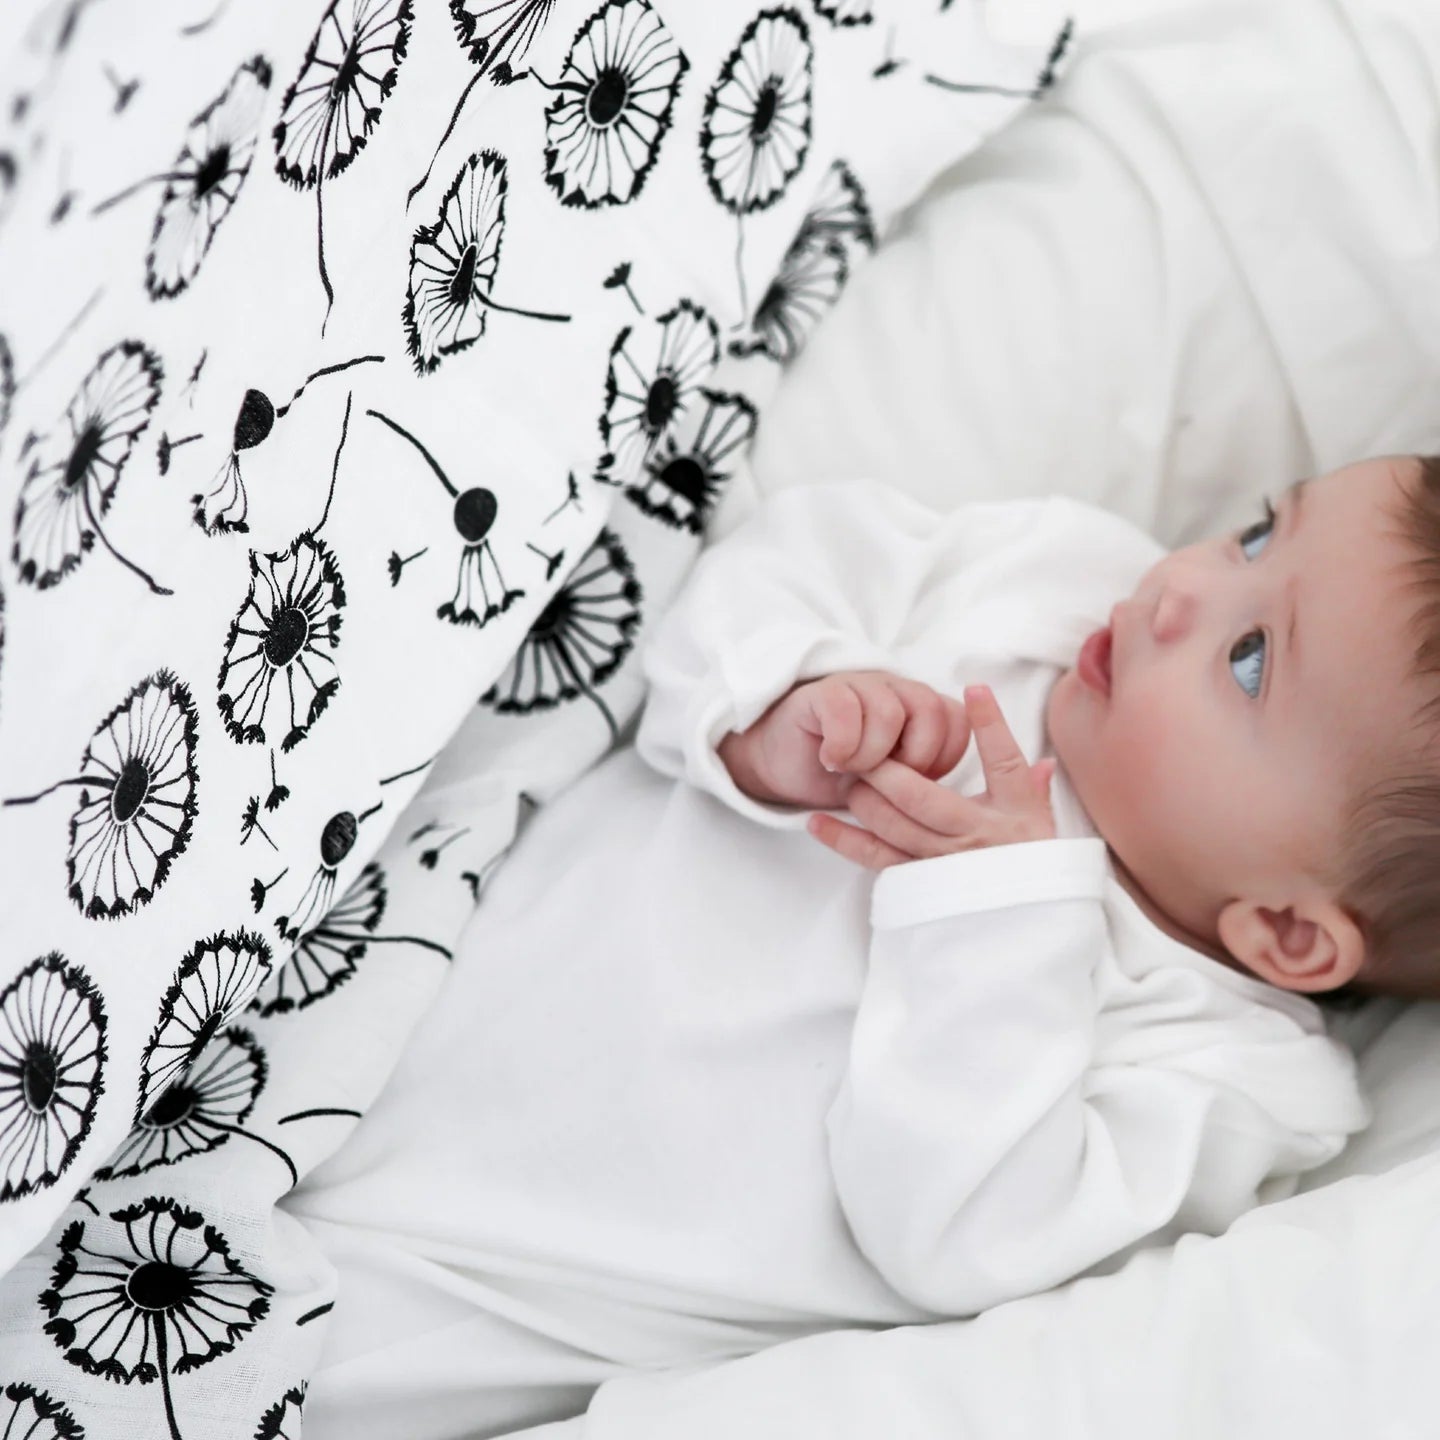 XL DANDELION MUSLIN - for newborn to 4 months old babies | BY ETTA LOVES